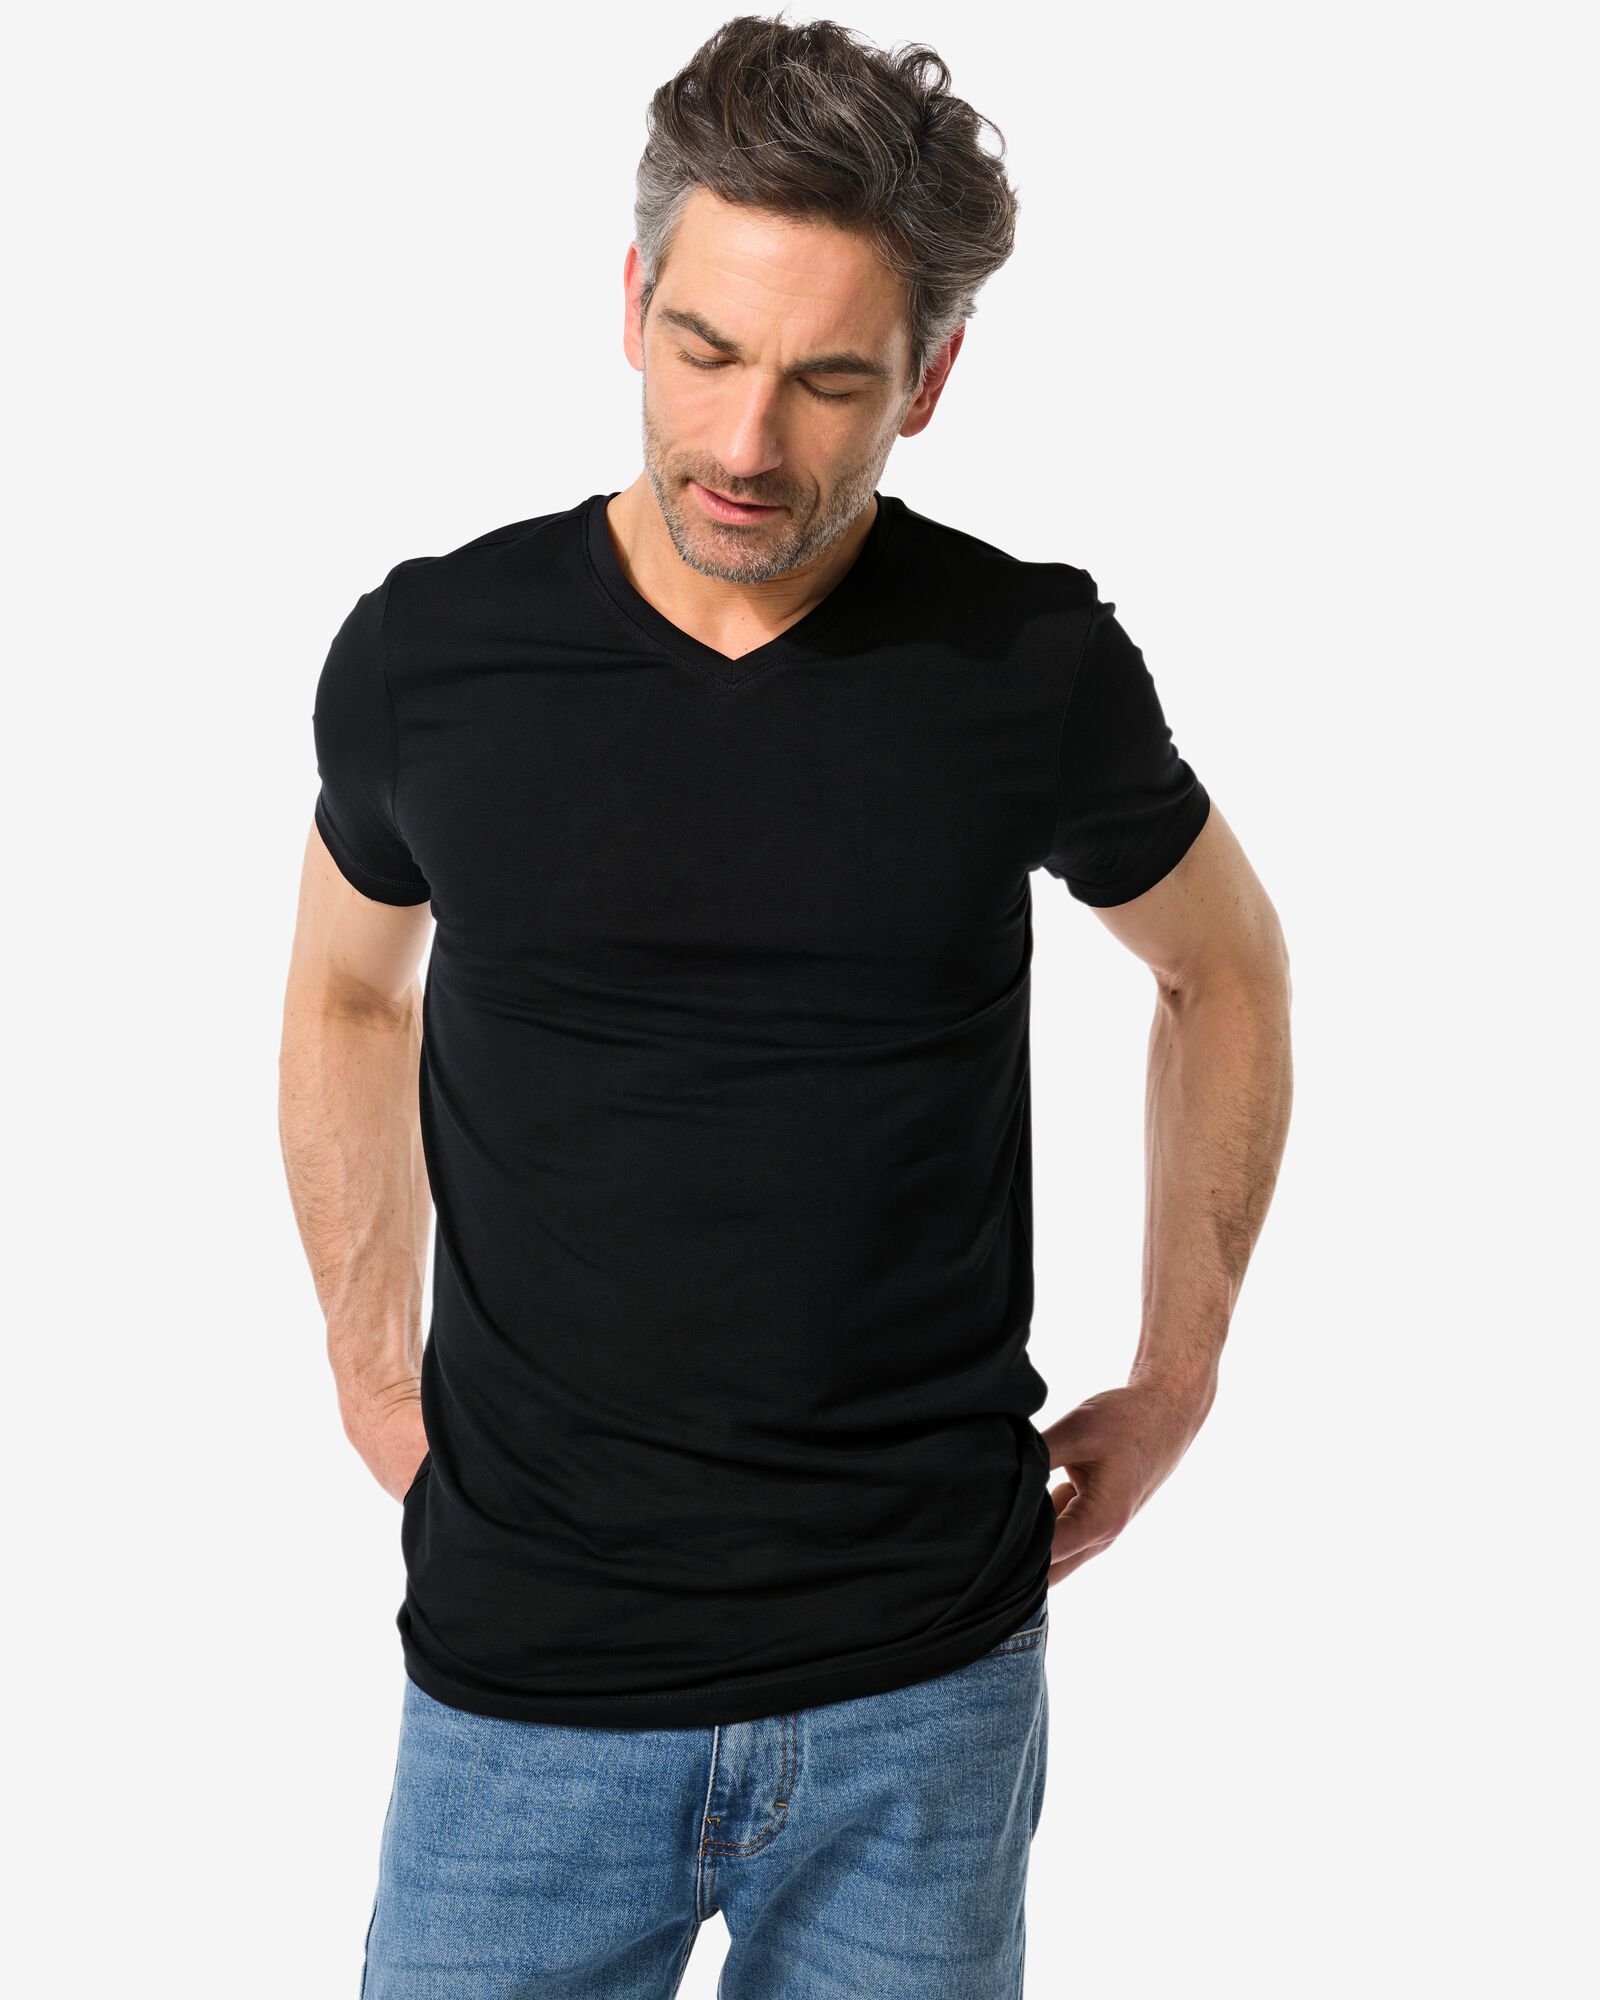 Image of HEMA Heren T-shirt Slim Fit V-hals Extra Lang Zwart (zwart)